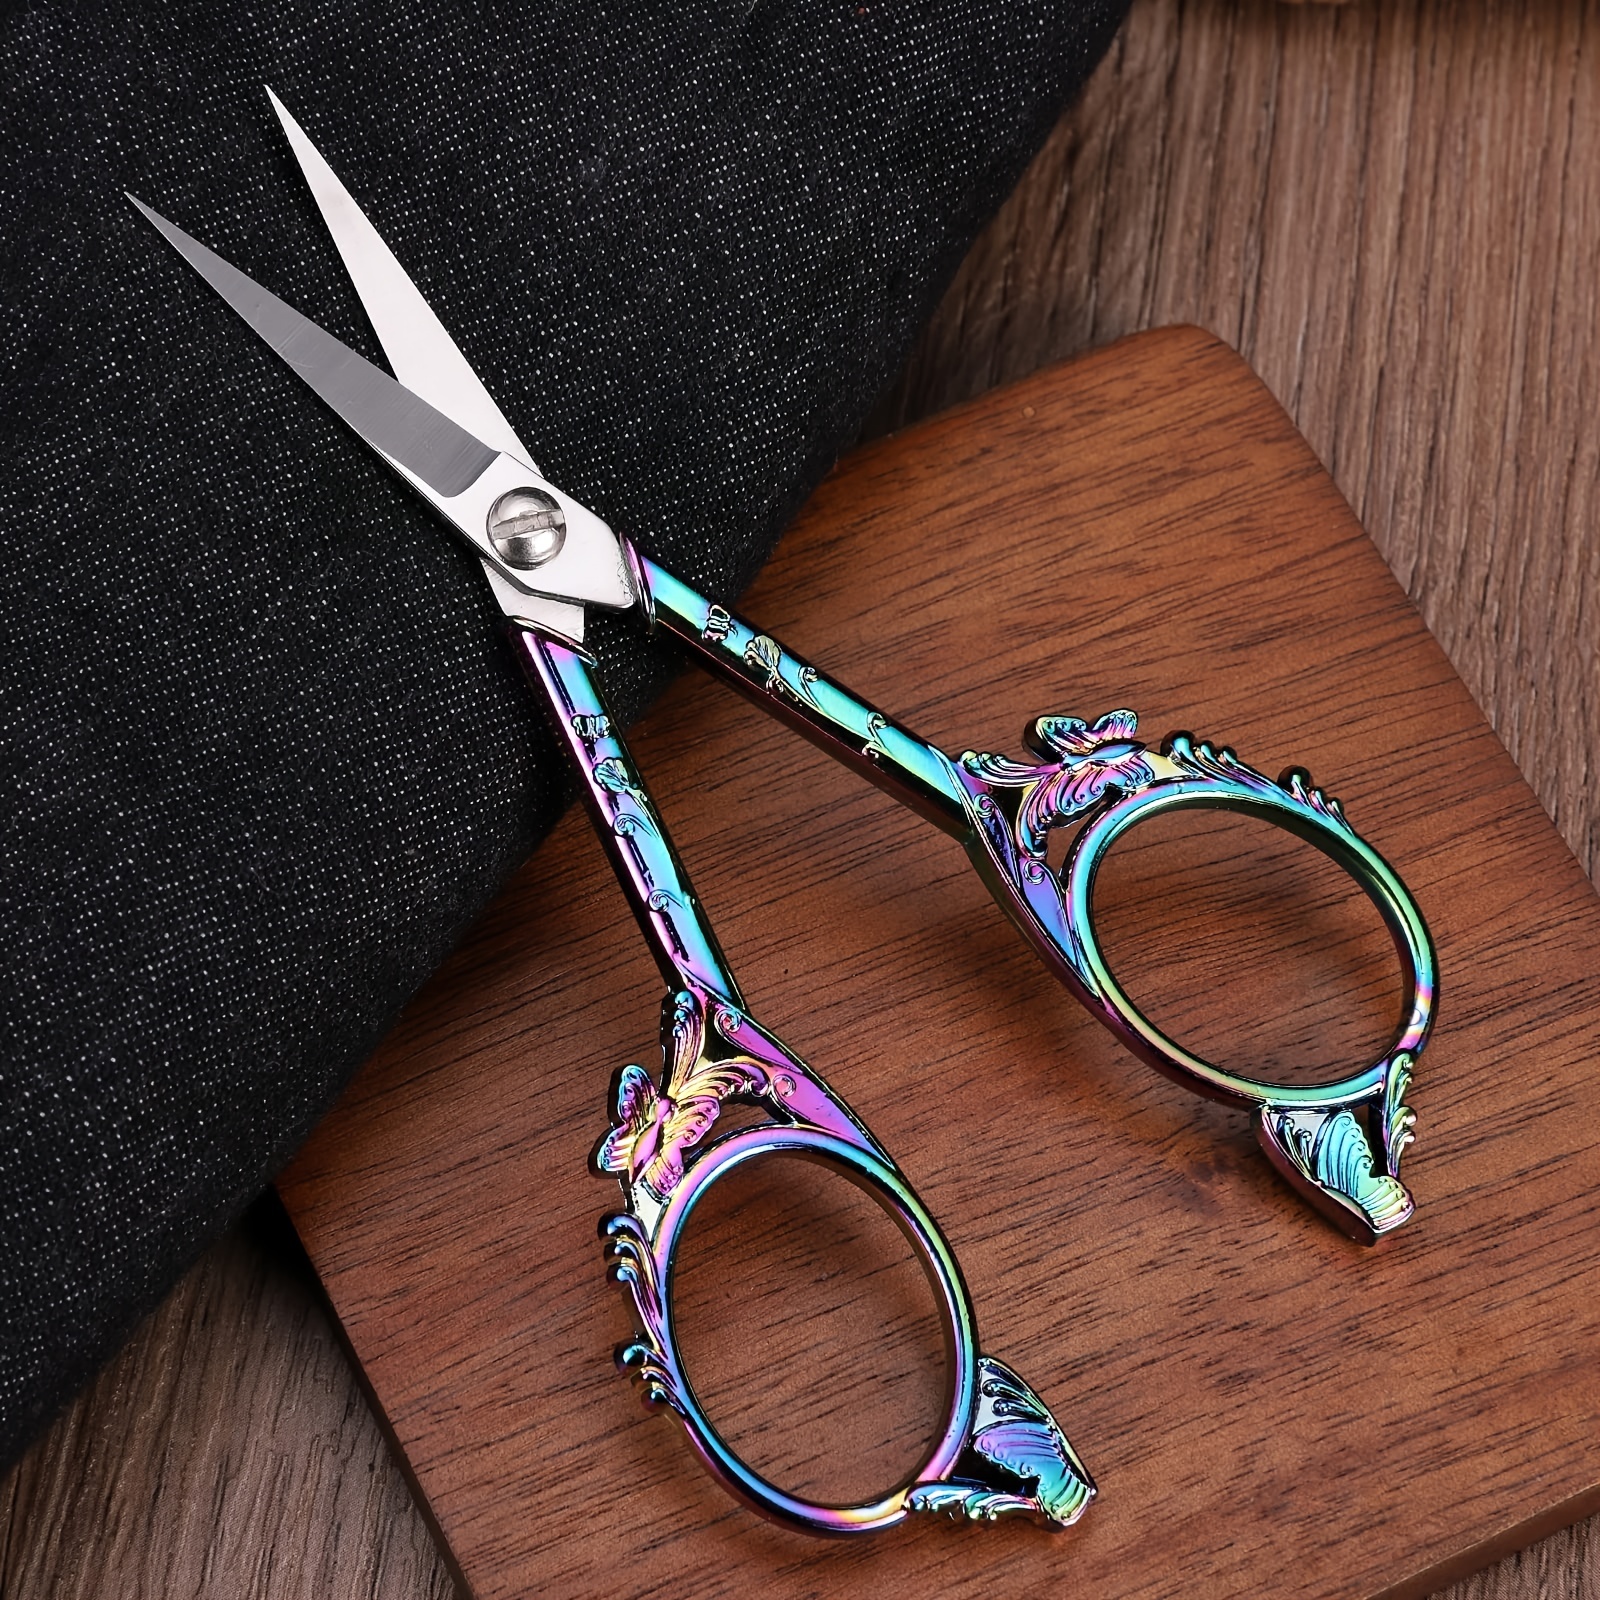 Tiny Snips Embroidery Scissors